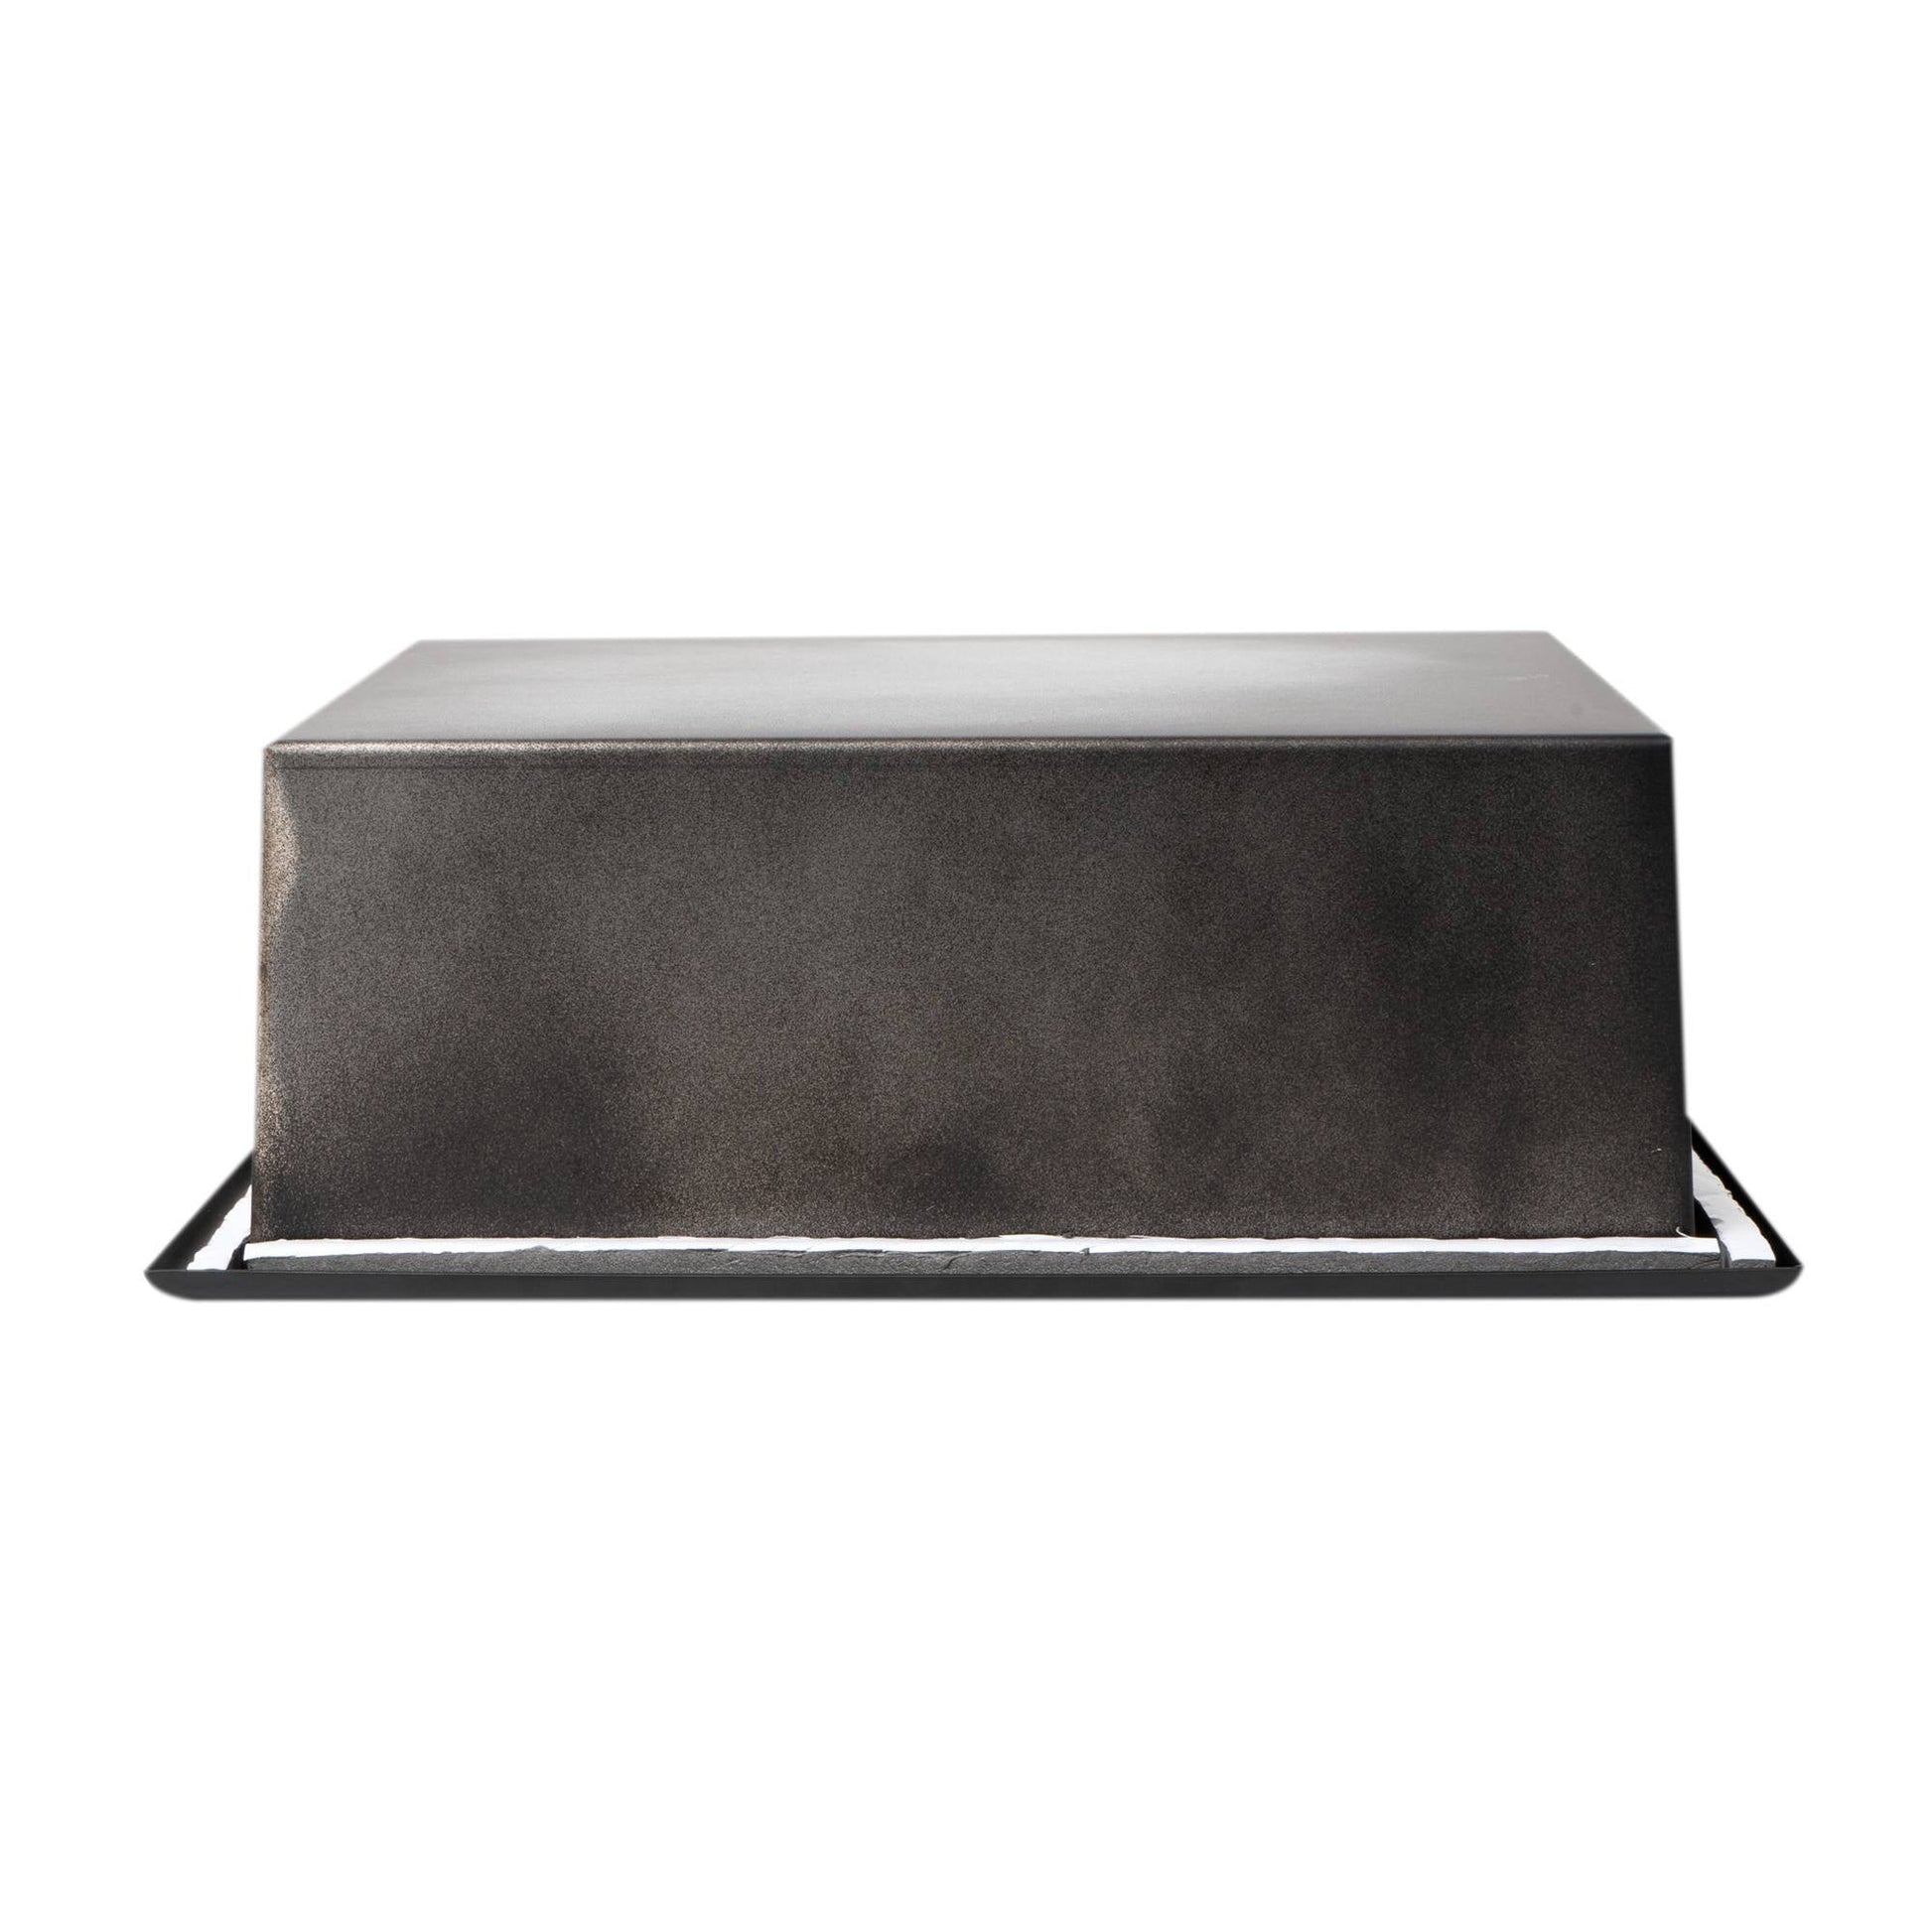 ALFI Brand ABNC1212-BLA 12" Black Matte Stainless Steel Square Single Shelf Bath Shower Niche